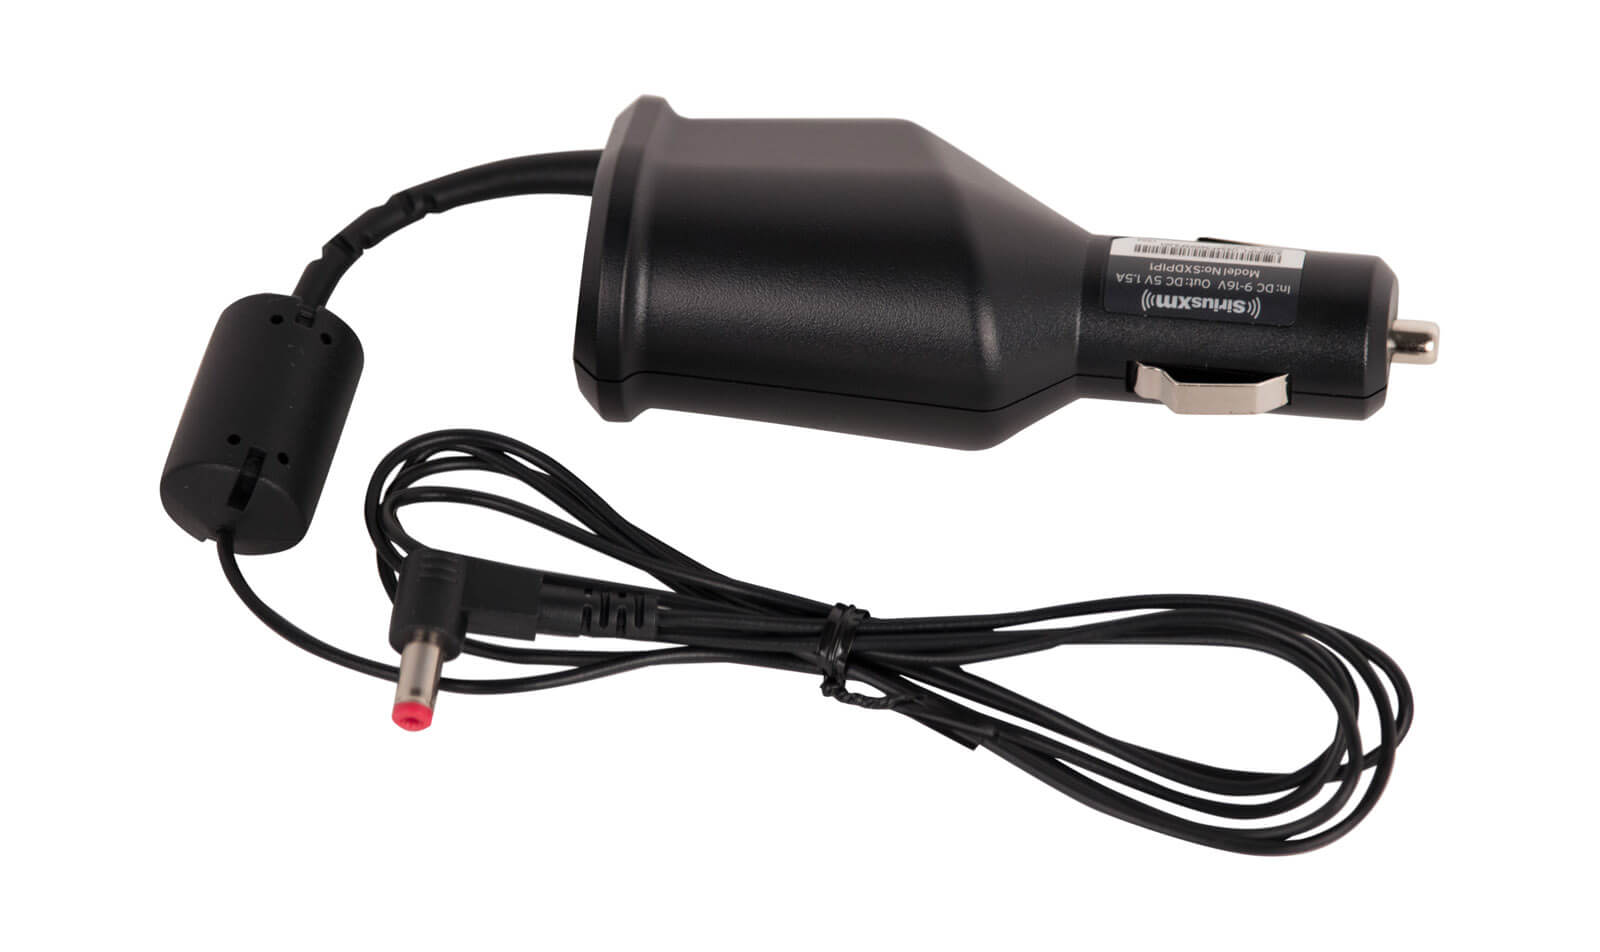 SXDPIP1 Truck Power adapter for Sirius XM Radio receivers